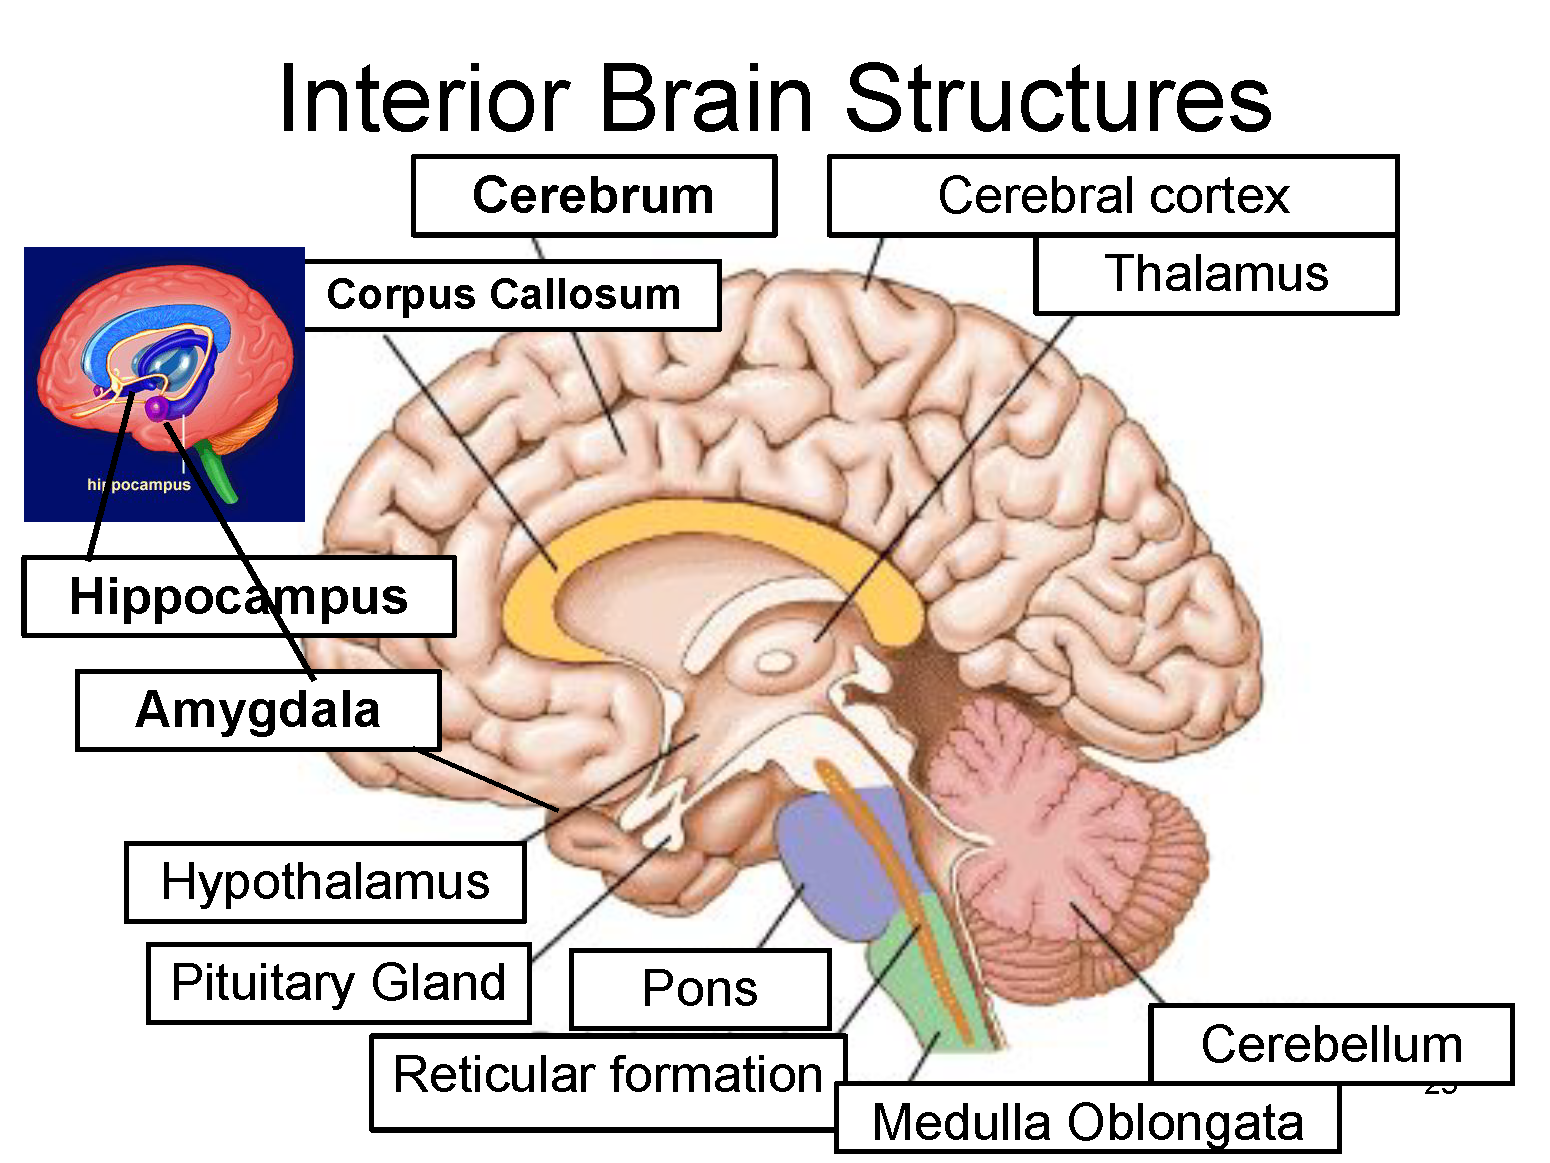 <ul><li><p>"little brain" attached to the rear of the brain stem</p></li><li><p>processes sensory input and coordinates movement output and balance</p></li><li><p>non-verbal memory</p></li><li><p>negatively affected by alcohol</p></li></ul>